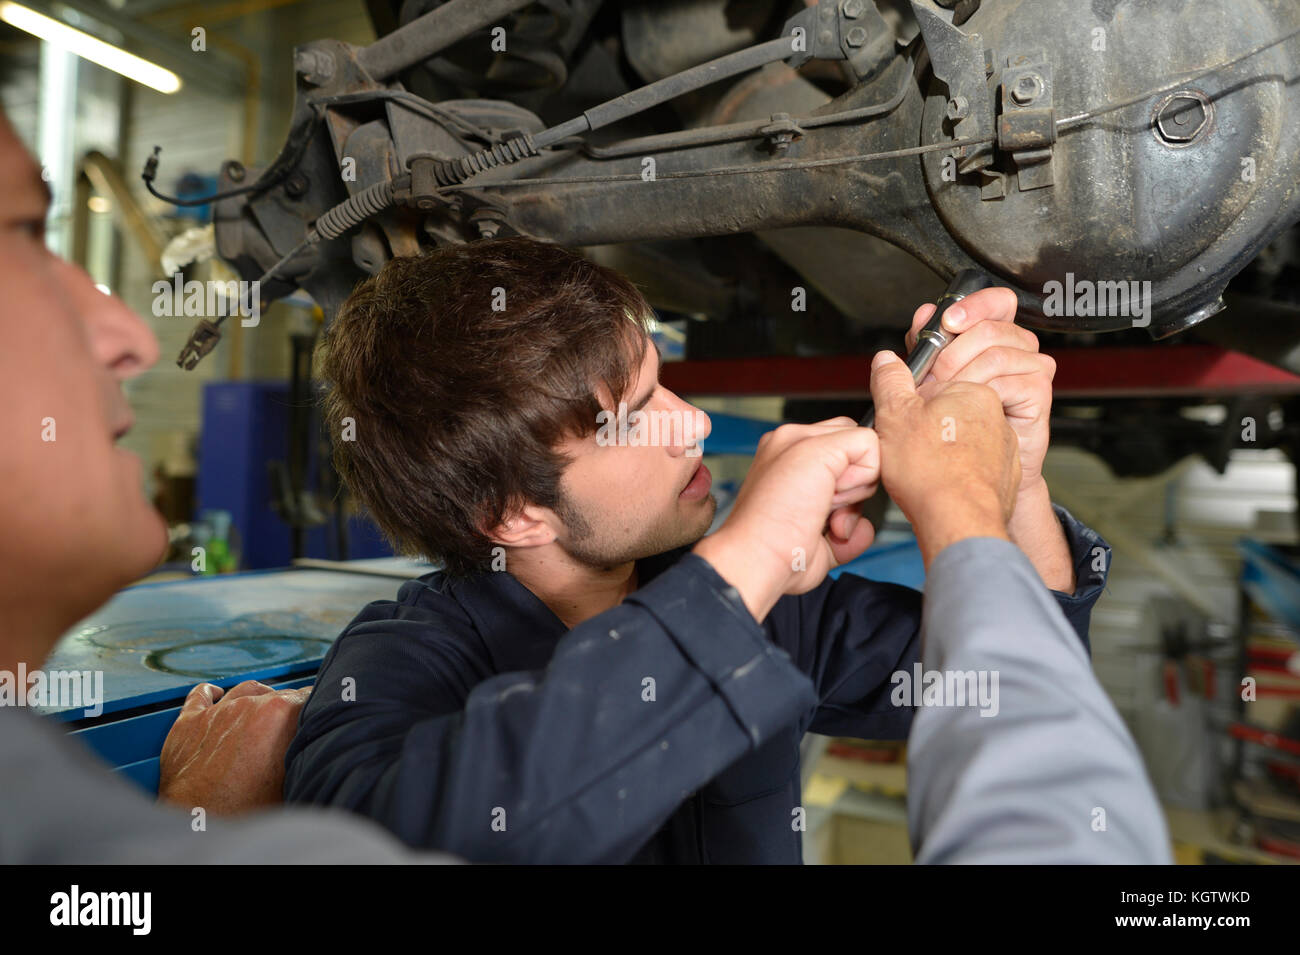 Mechanics teacher with student in car repairshop Stock Photo